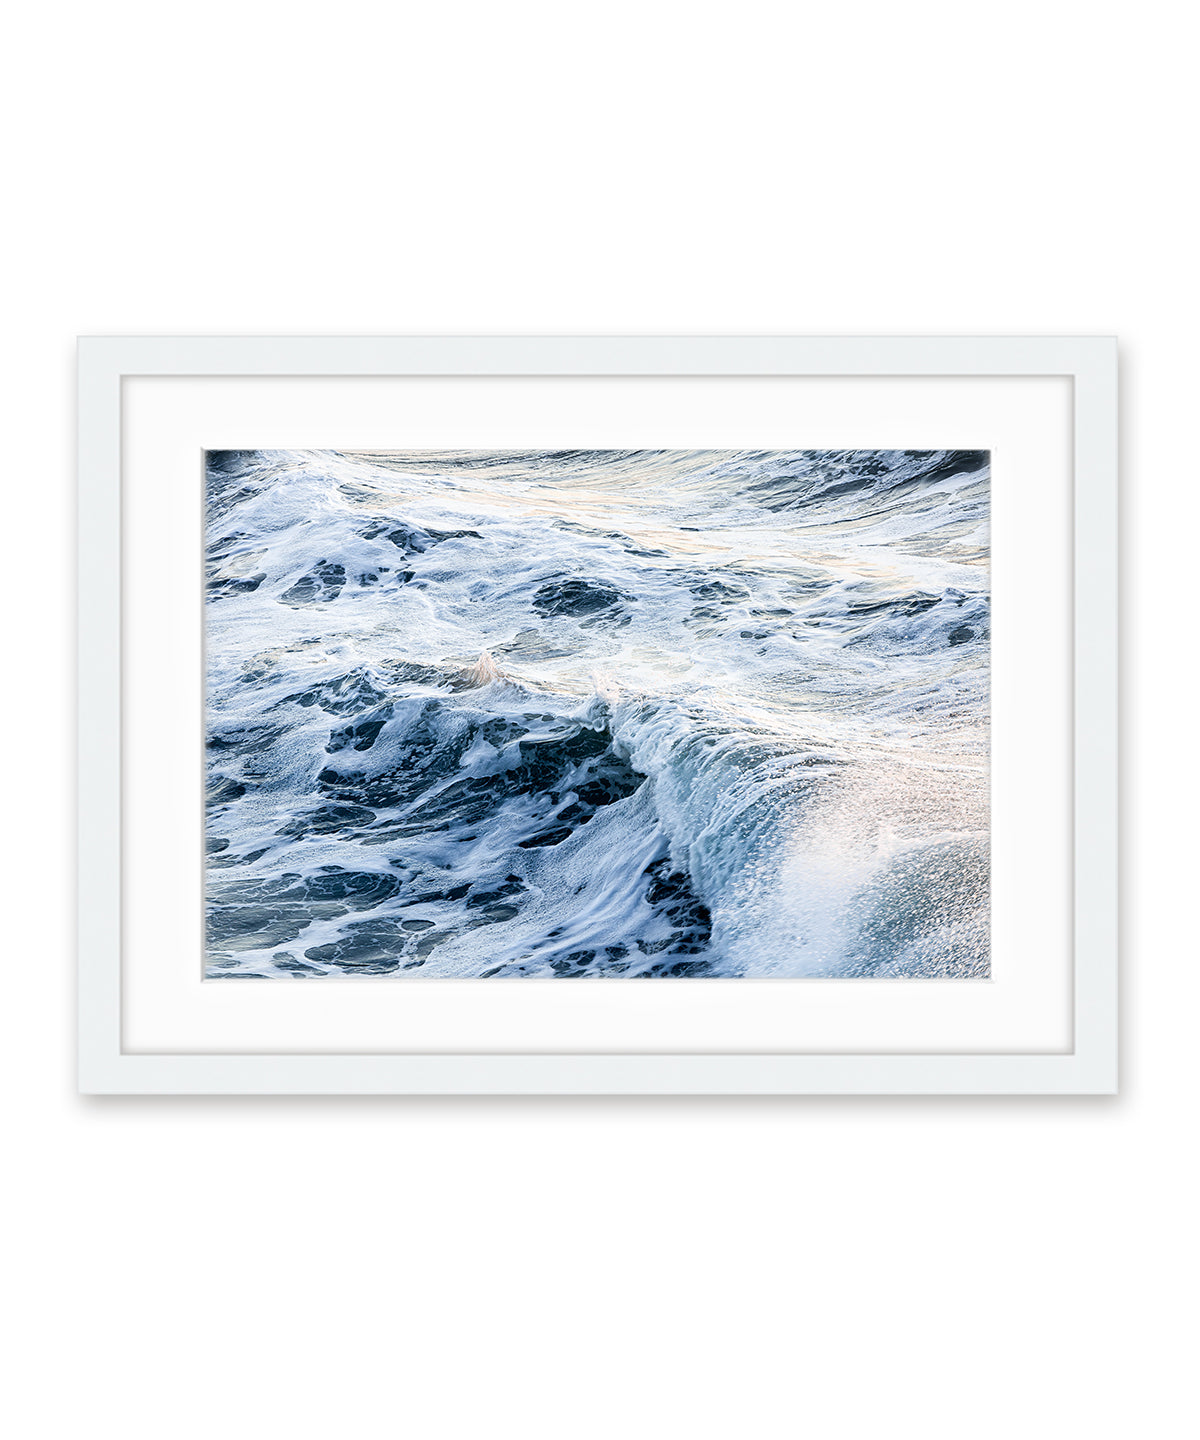 indigo wave detail photograph with white frame